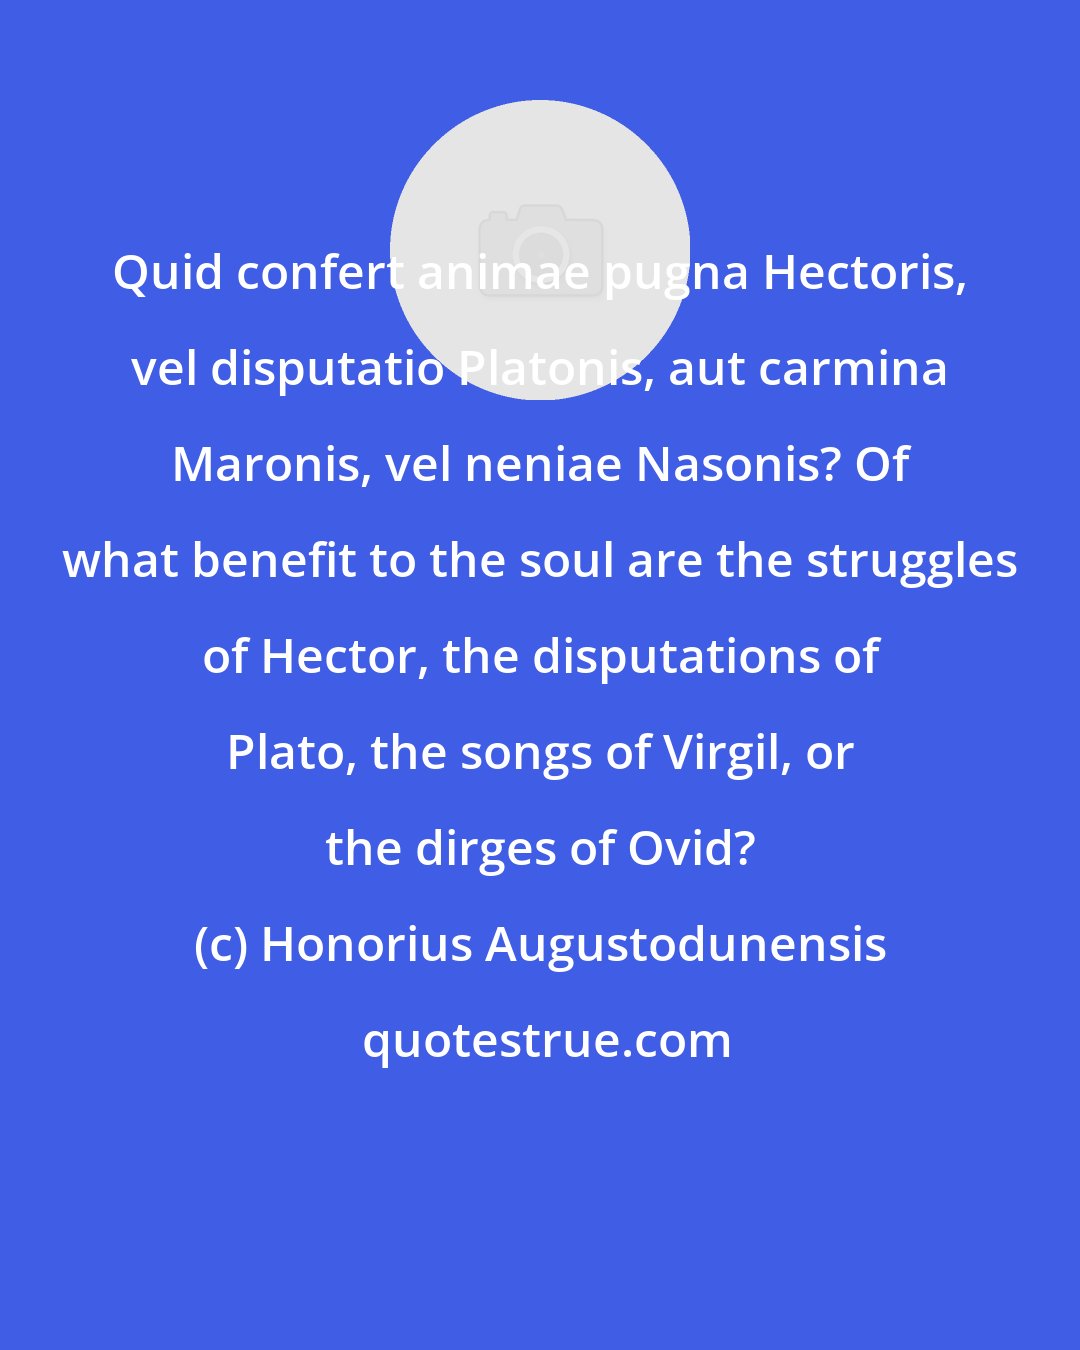 Honorius Augustodunensis: Quid confert animae pugna Hectoris, vel disputatio Platonis, aut carmina Maronis, vel neniae Nasonis? Of what benefit to the soul are the struggles of Hector, the disputations of Plato, the songs of Virgil, or the dirges of Ovid?